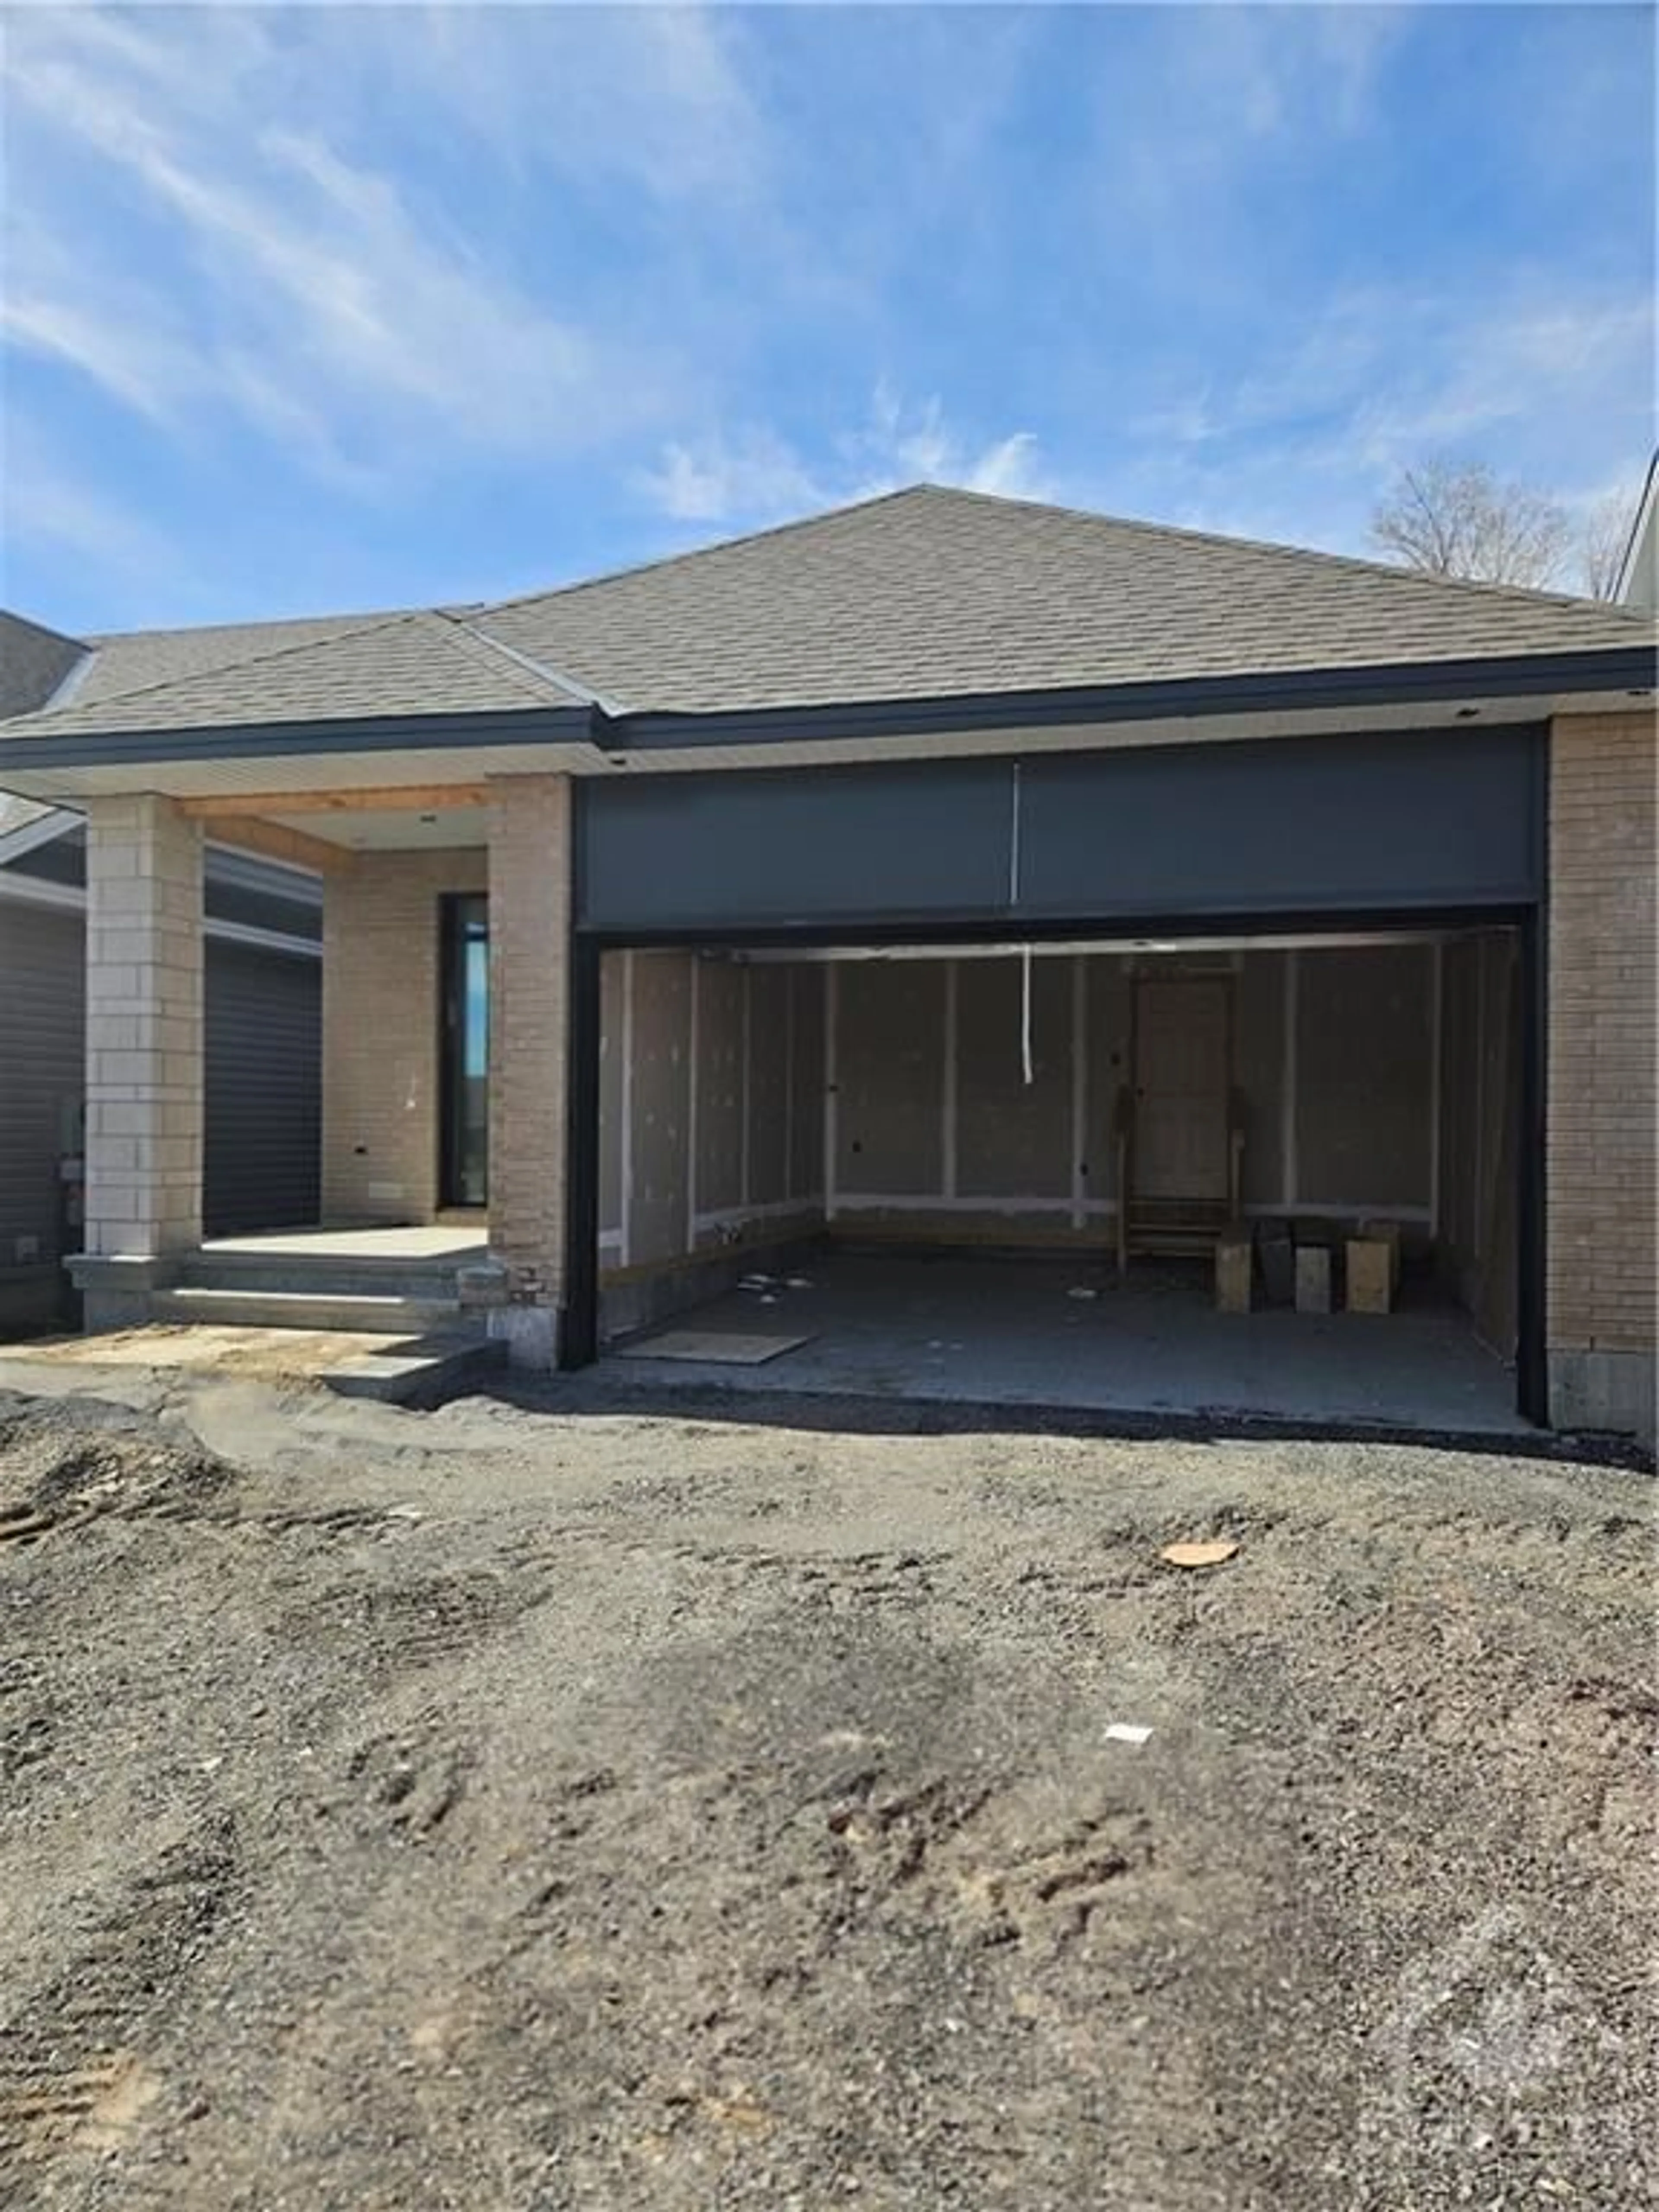 Home with brick exterior material for 22 KAYENTA St, Ottawa Ontario K2S 2K8